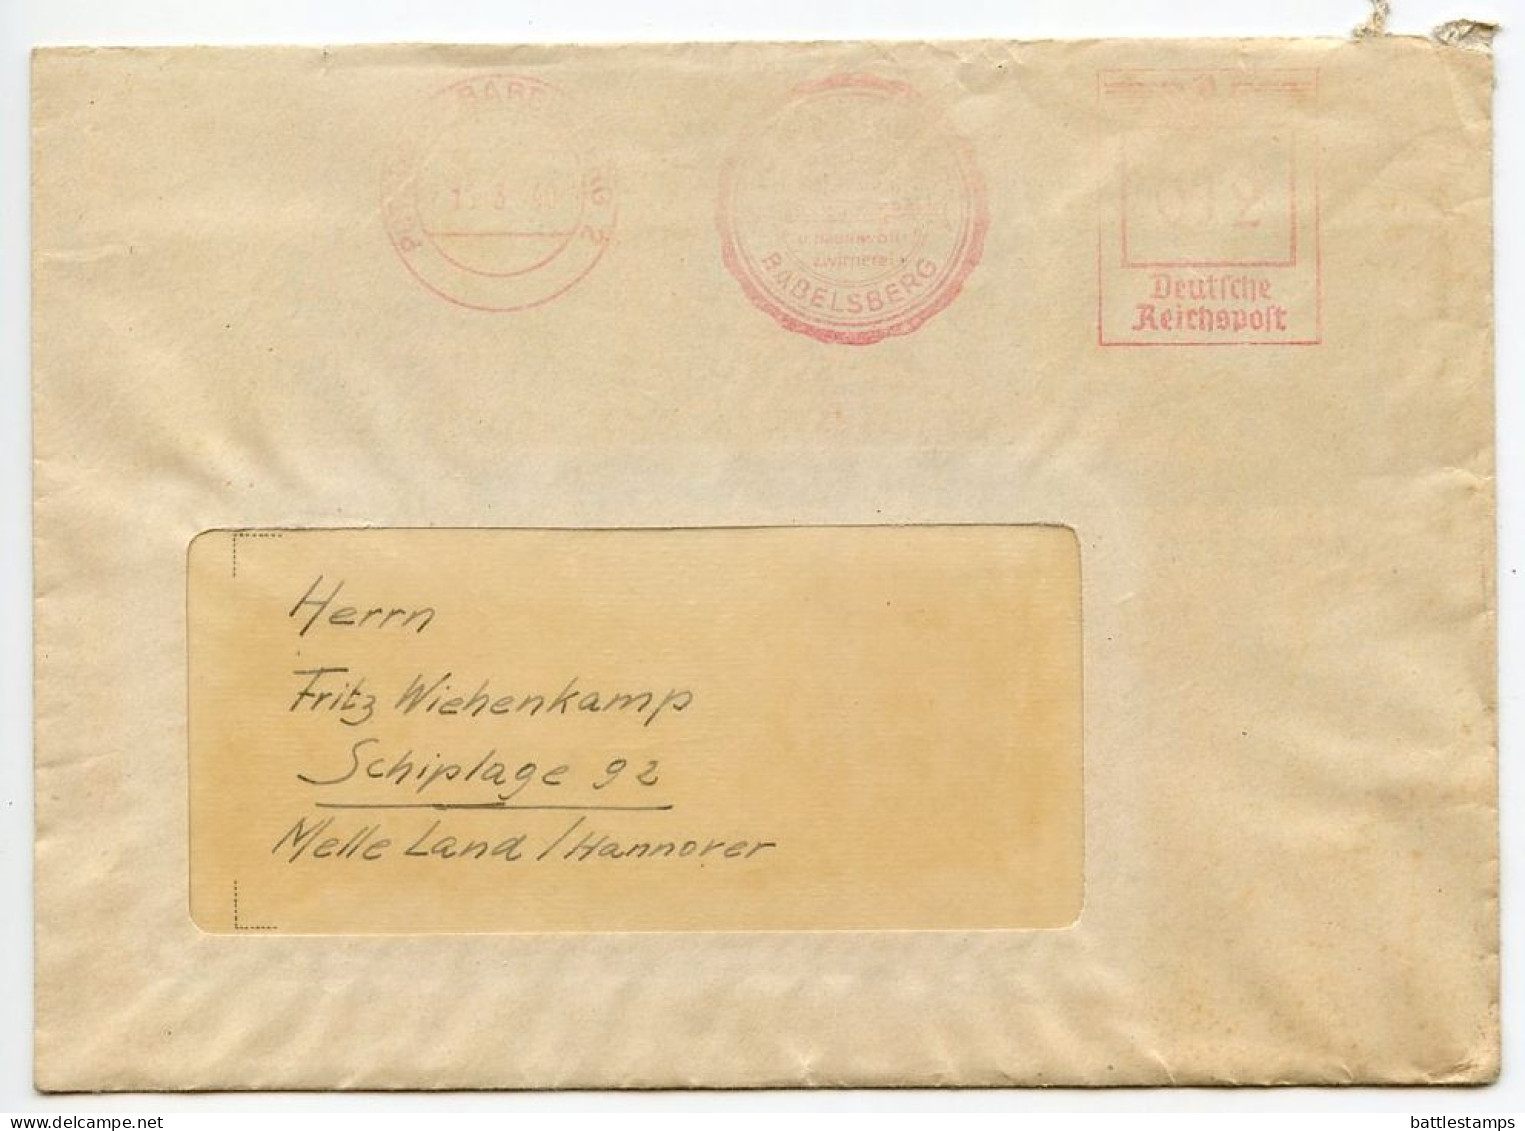 Germany 1940 Cover & Letter; Potsdam-Babelsberg - Franz Klinder To Schiplage; 12pf. Meter With Company Slogan - Frankeermachines (EMA)